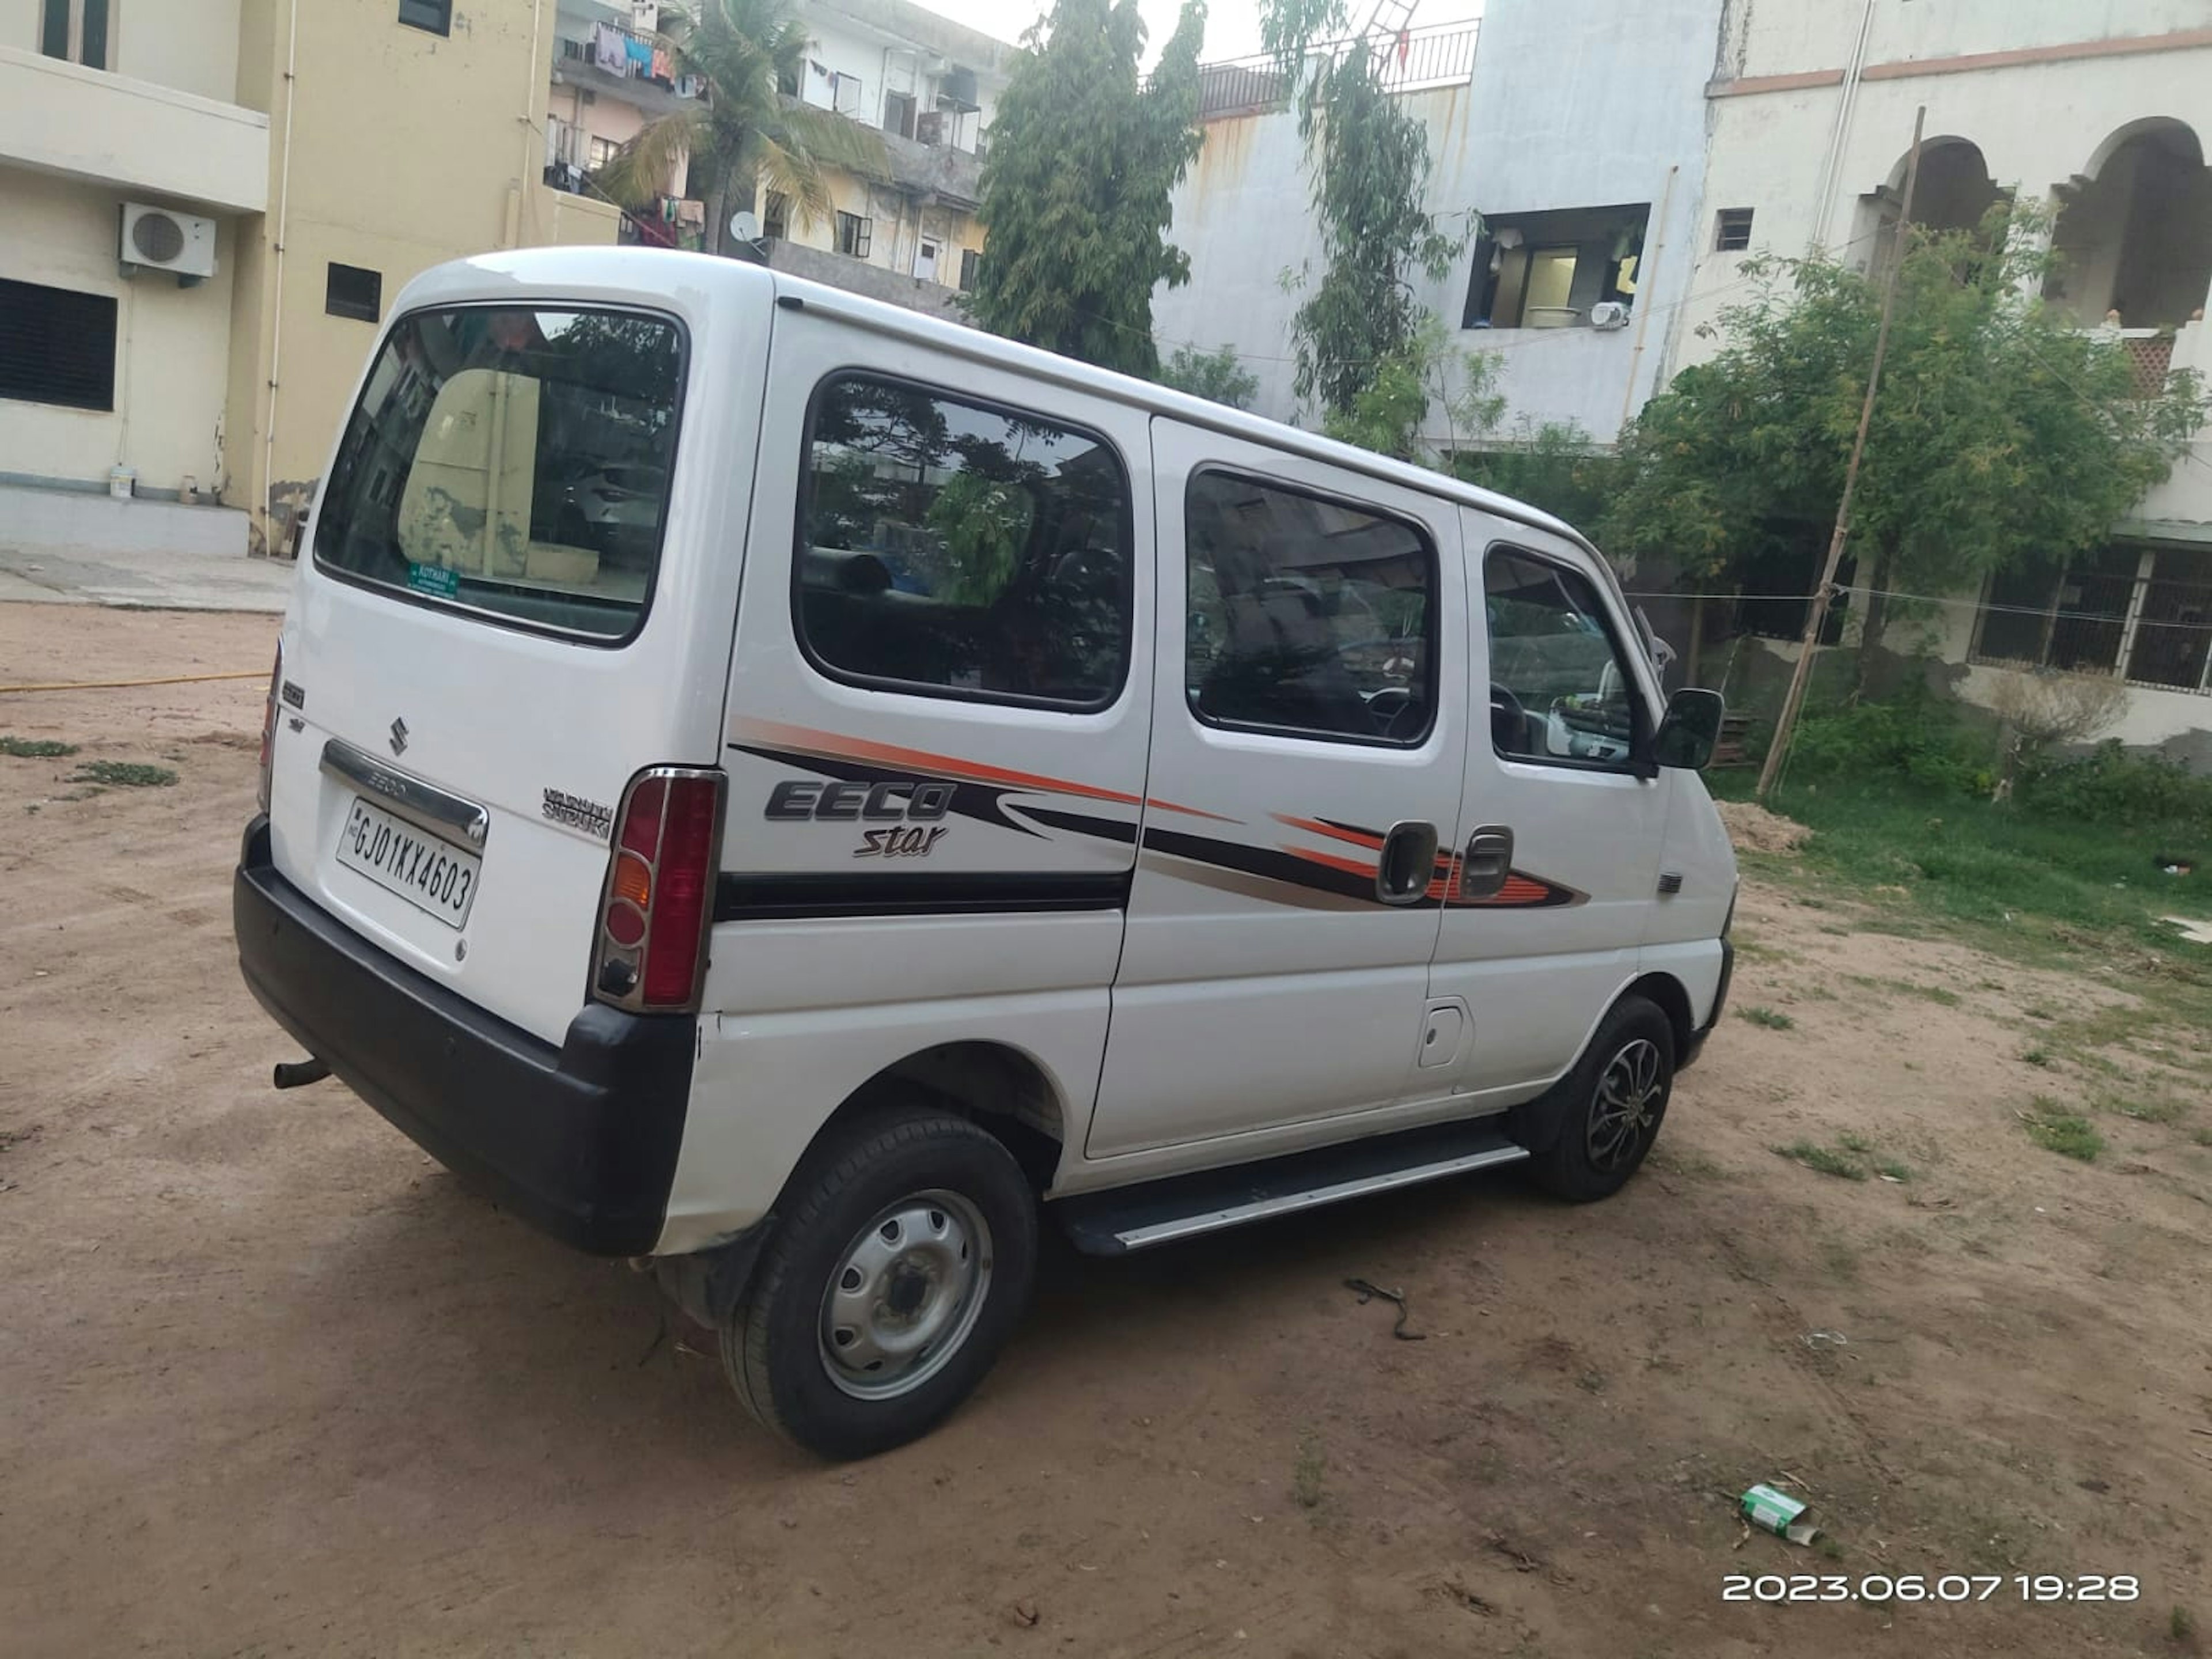 View - Maruti Suzuki Eeco photos, Maruti Suzuki Eeco available in Ahmedabad, make deal in 450000